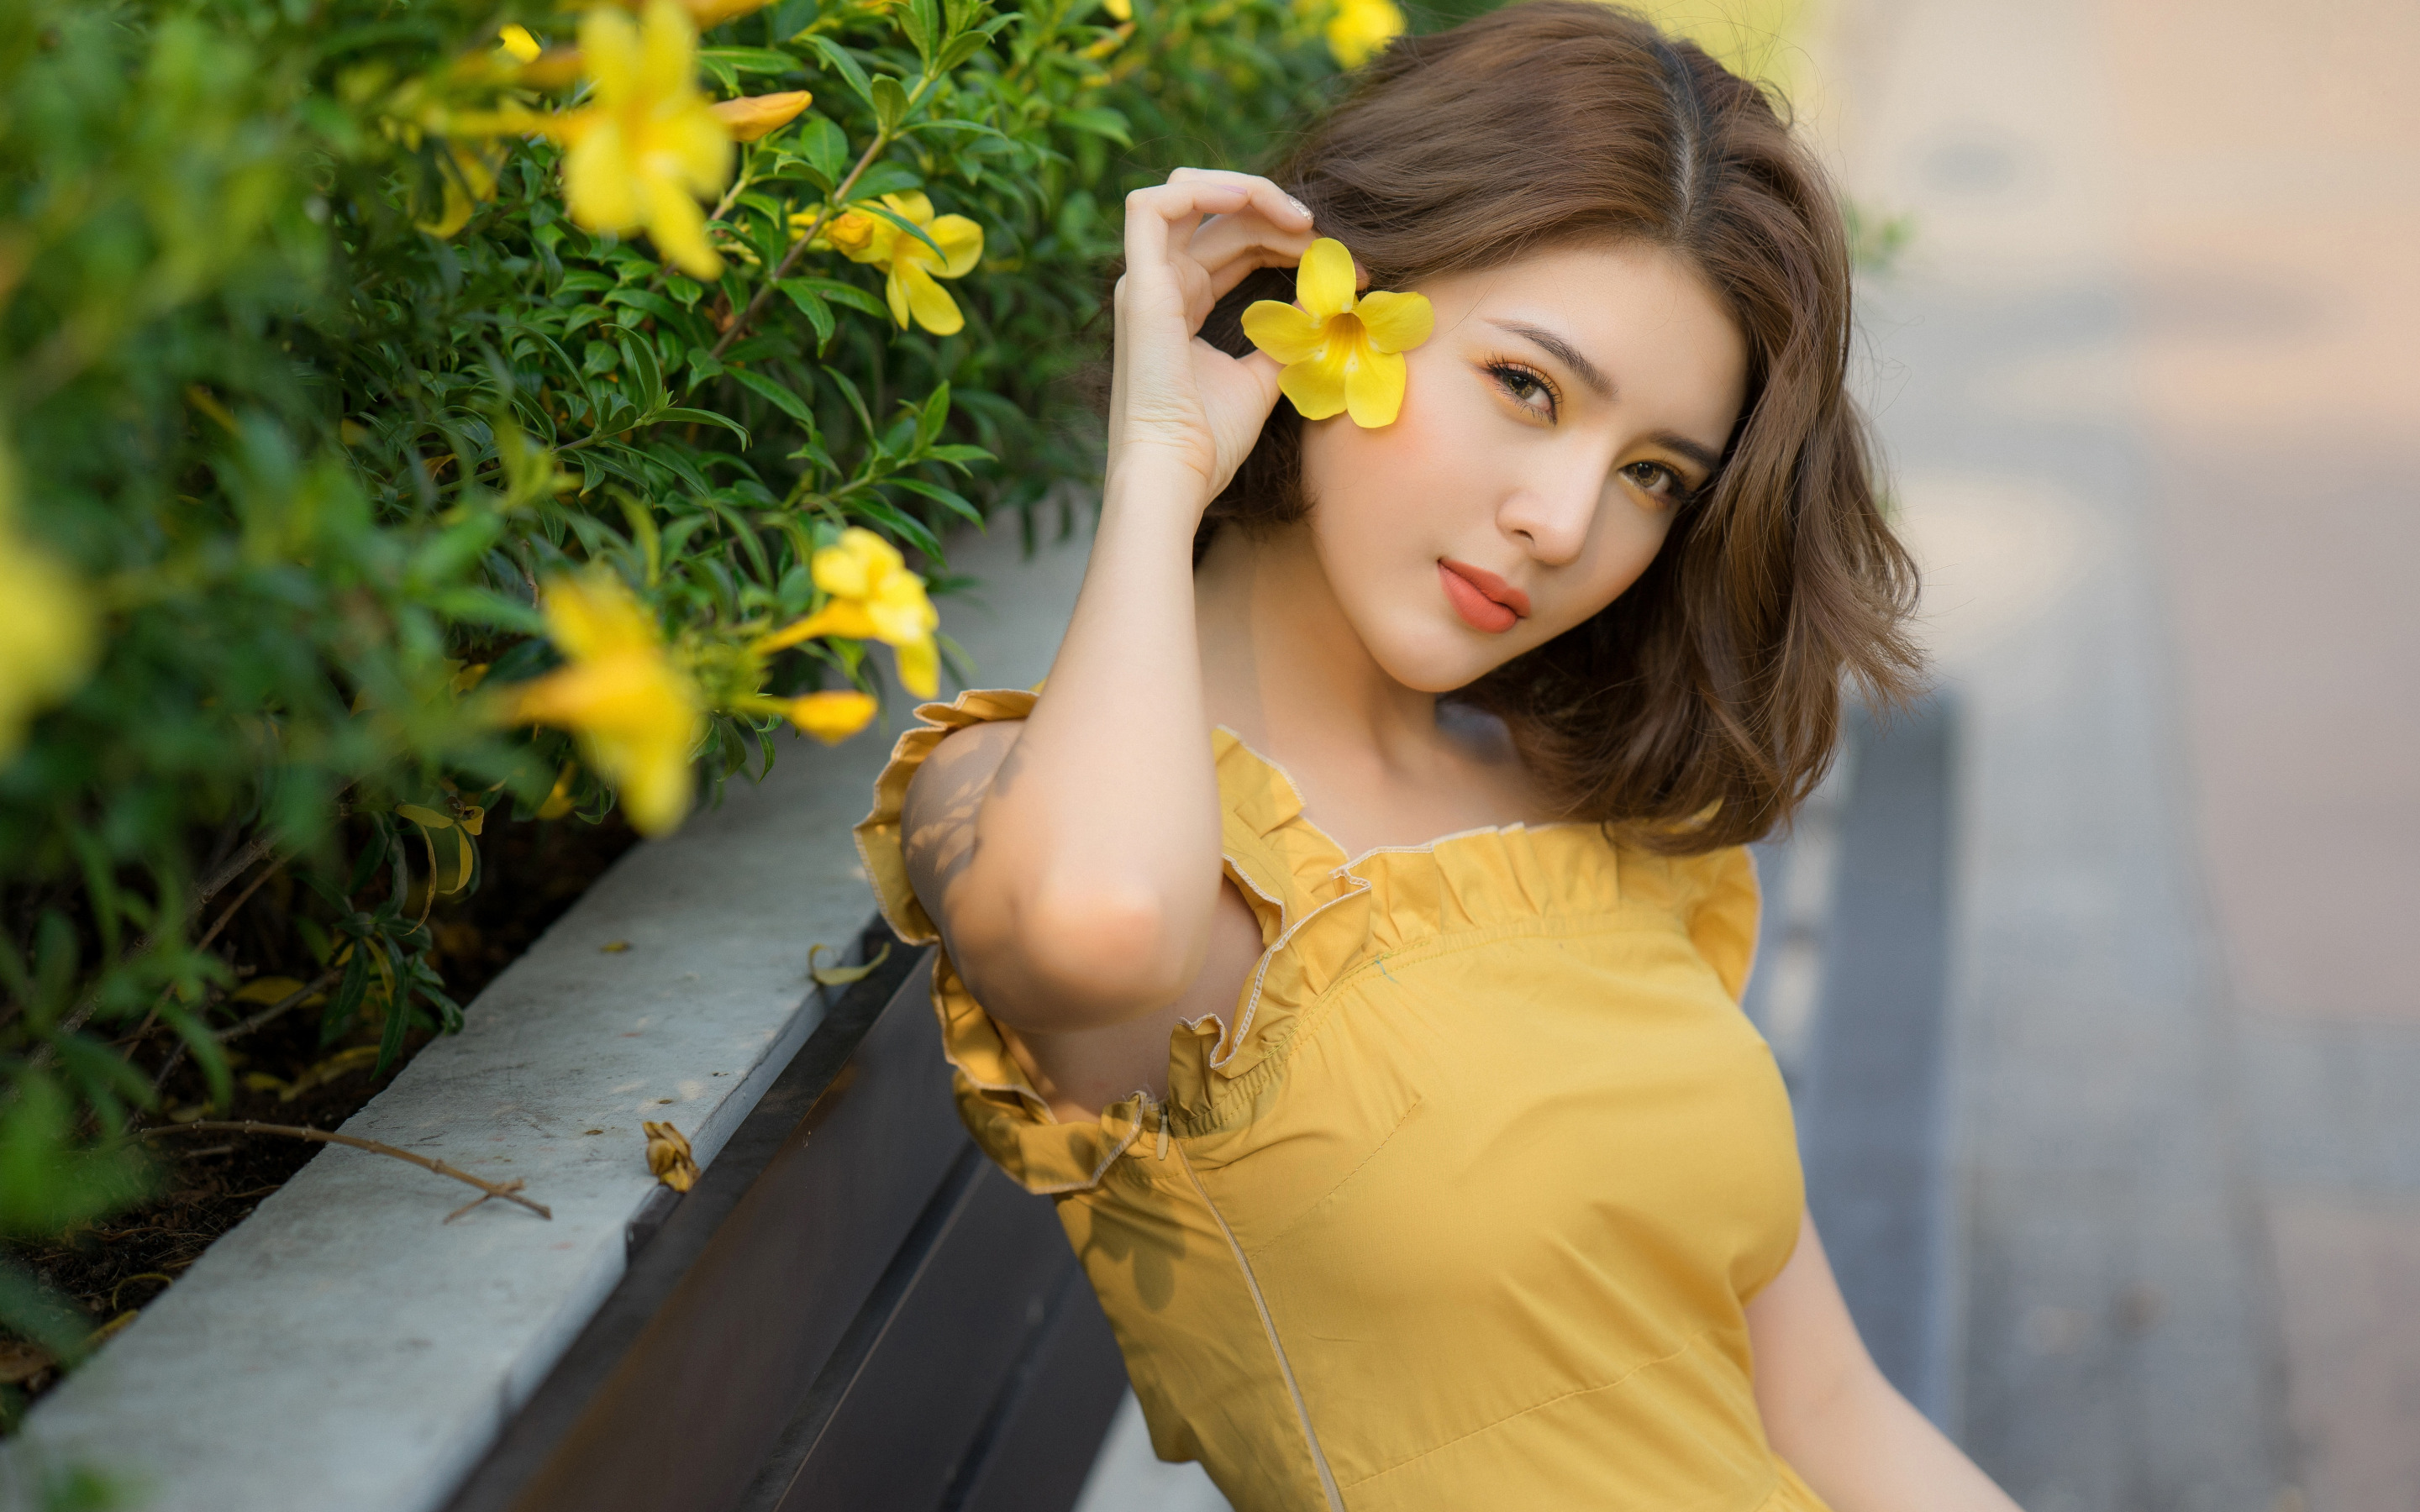 Model Women Red Lipstick Asian Yellow Dress Women Outdoors 2880x1800